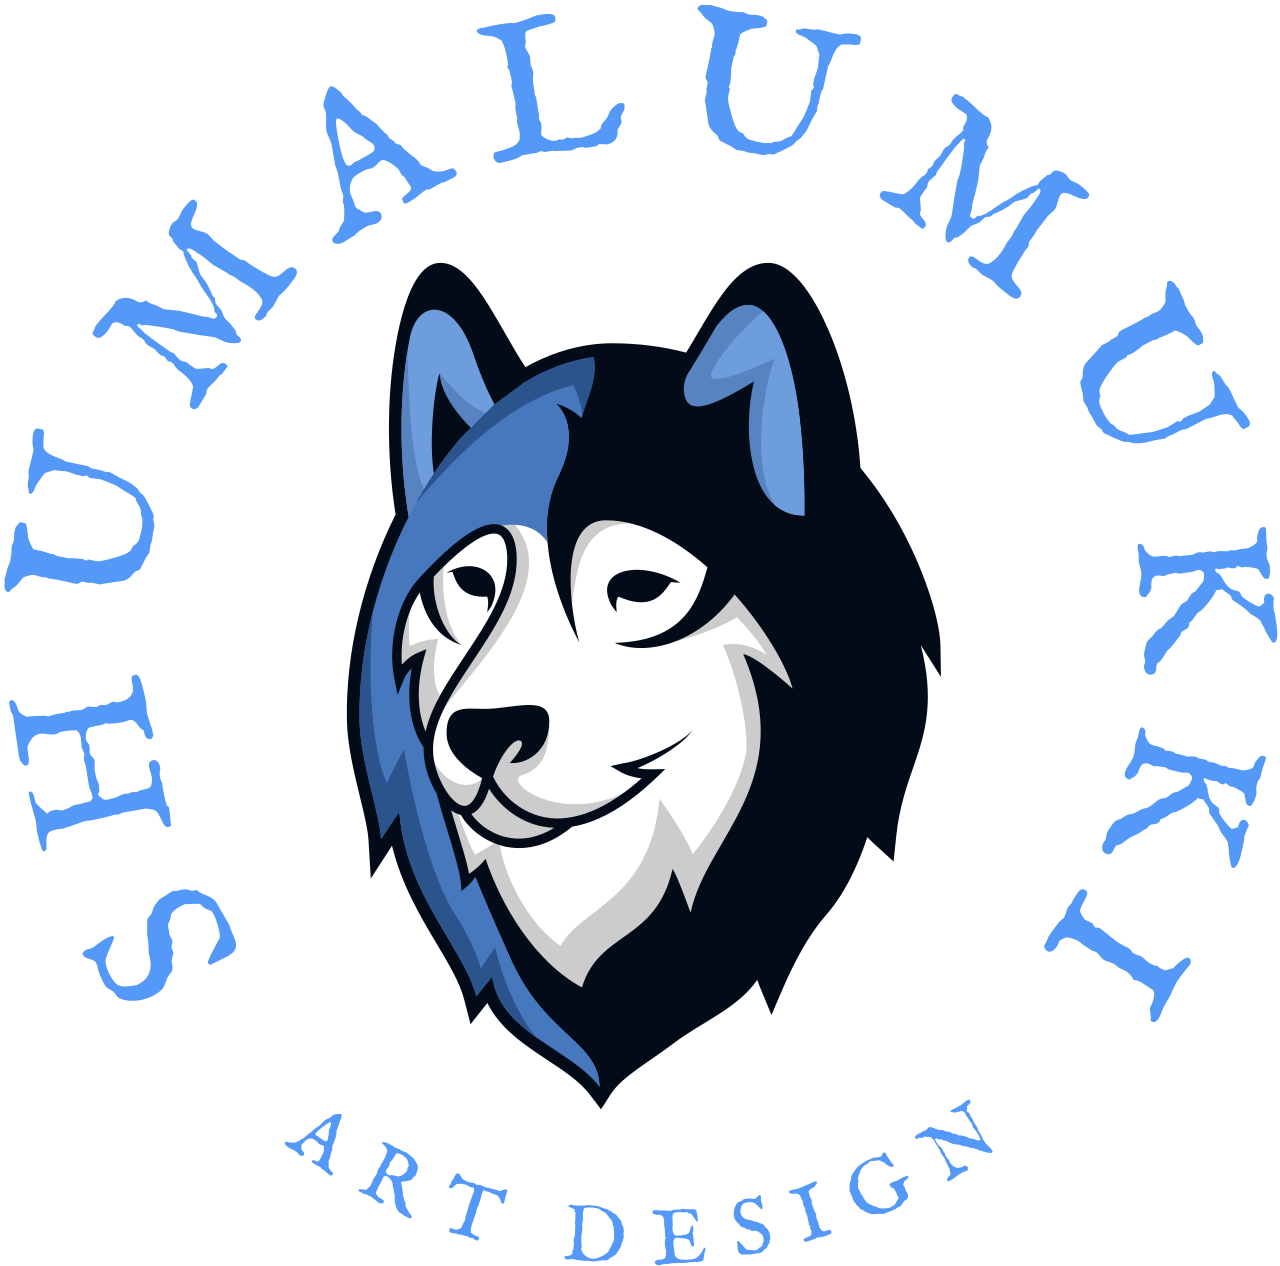 SHUMALUMUKKI Art Design's web page